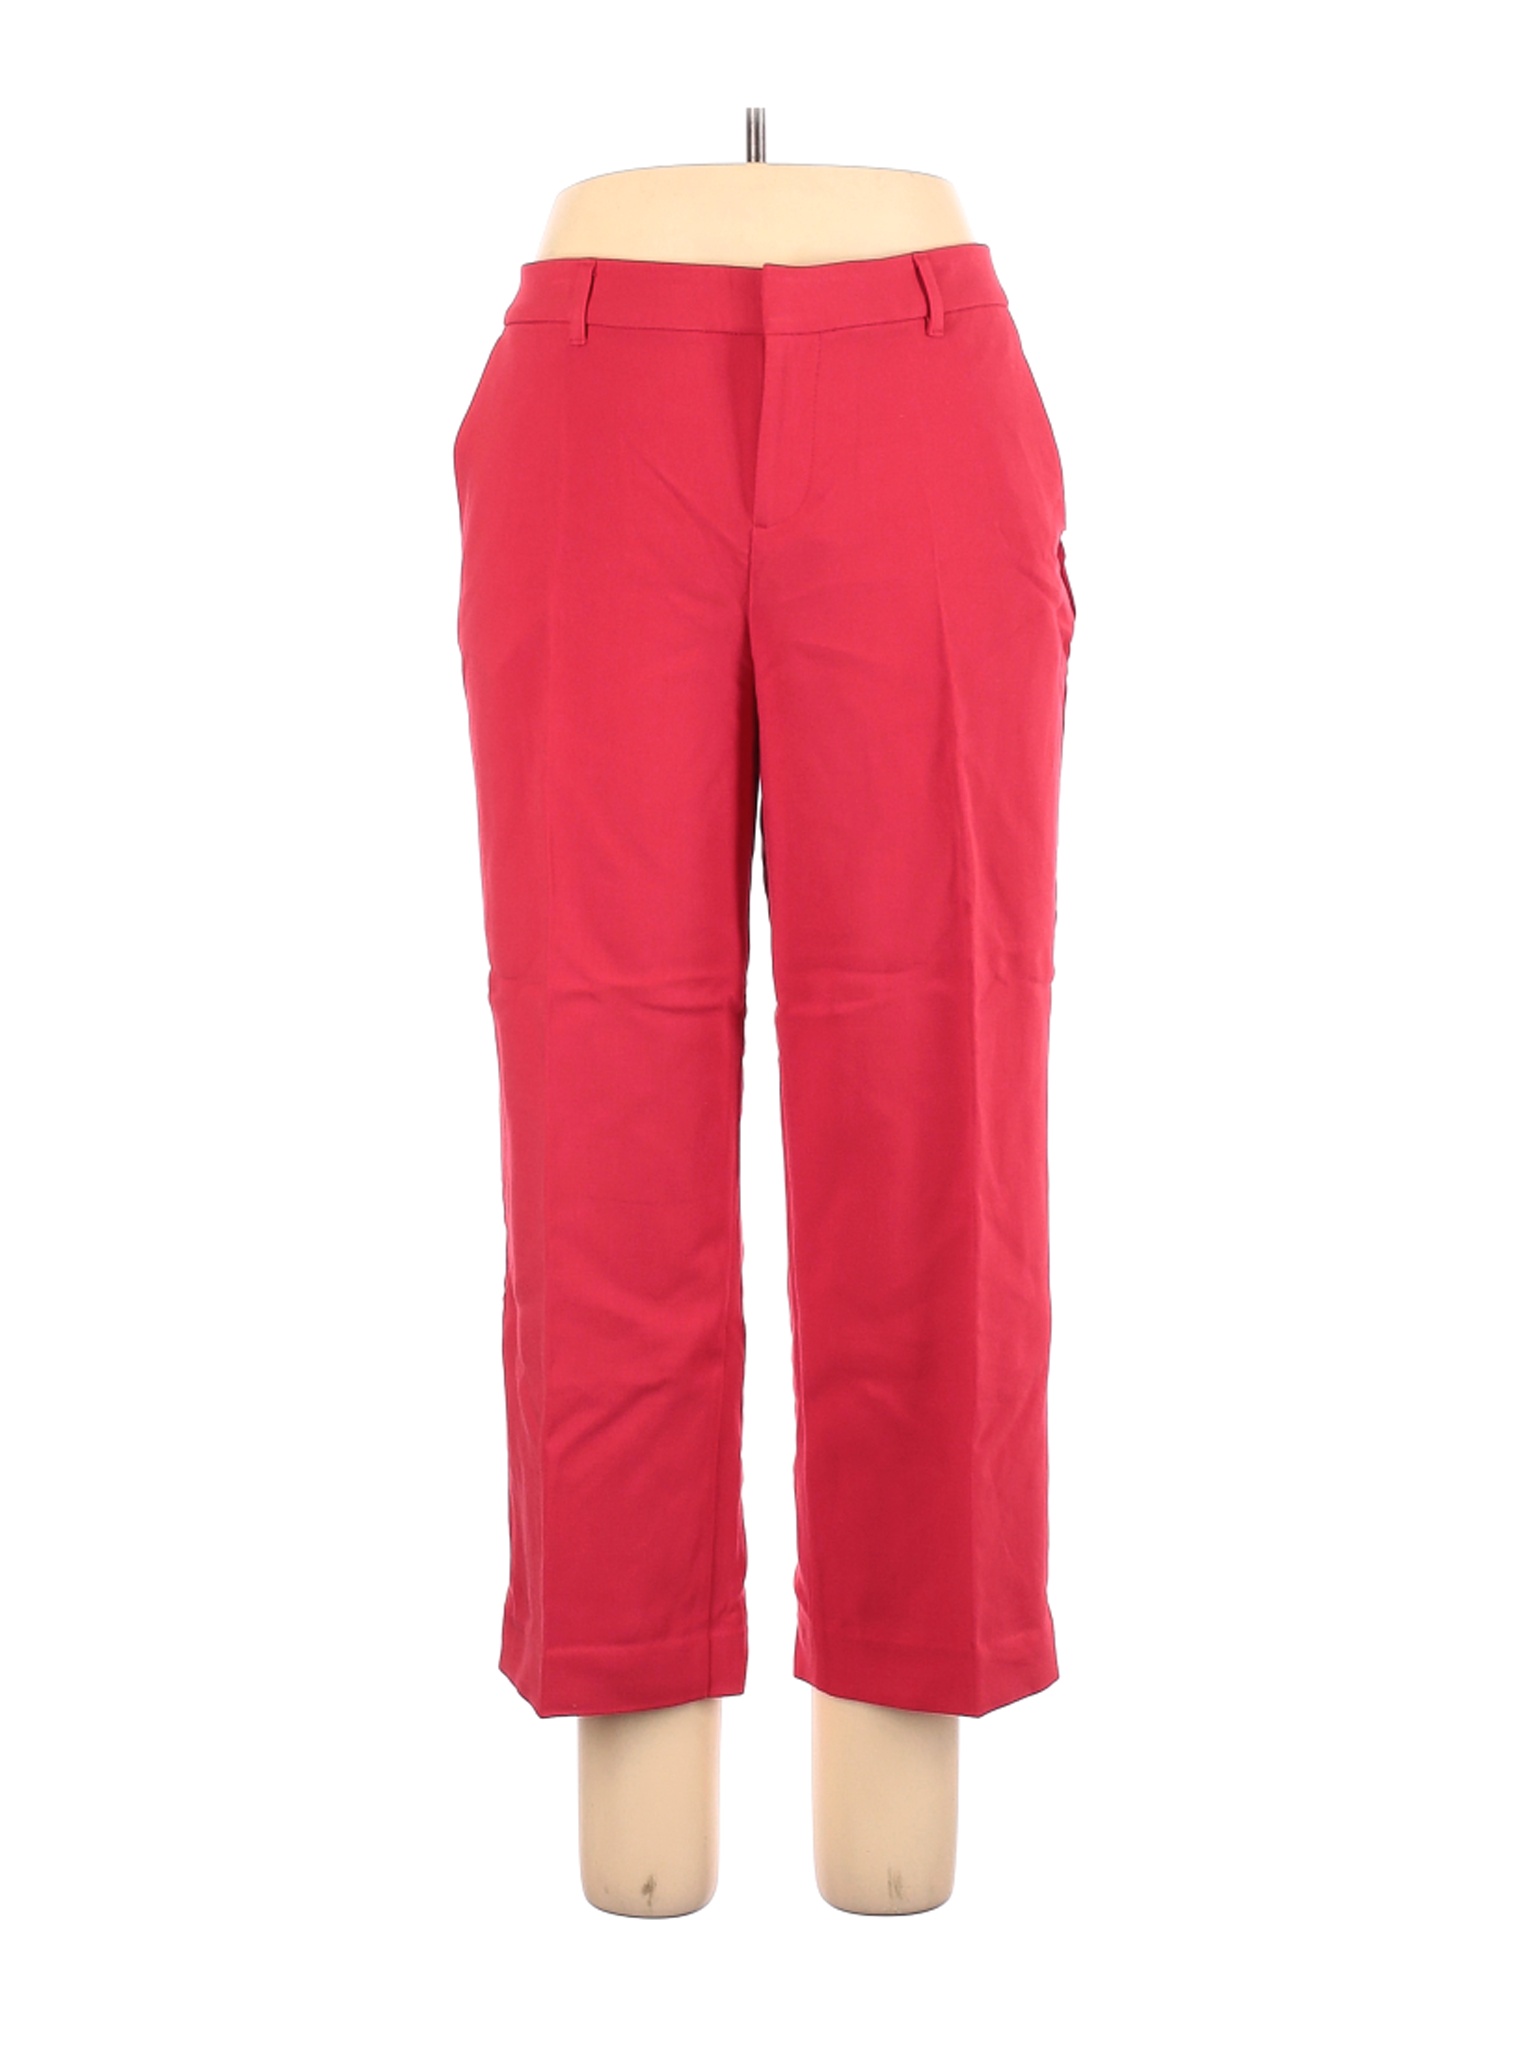 NWT Old Navy Women Red Dress Pants 14 | eBay